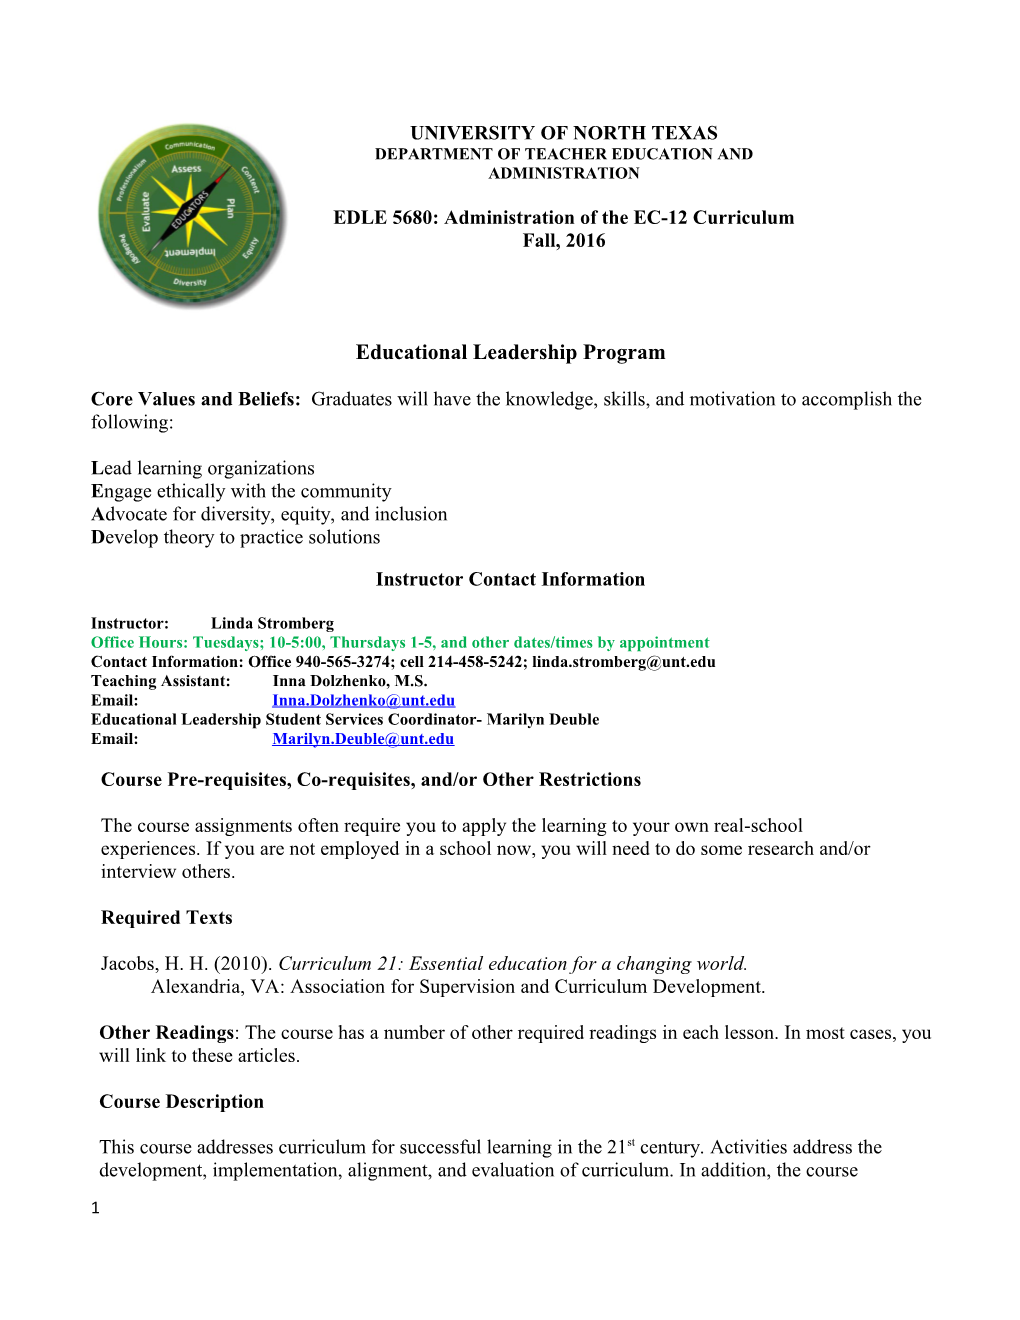 Educational Leadership Program